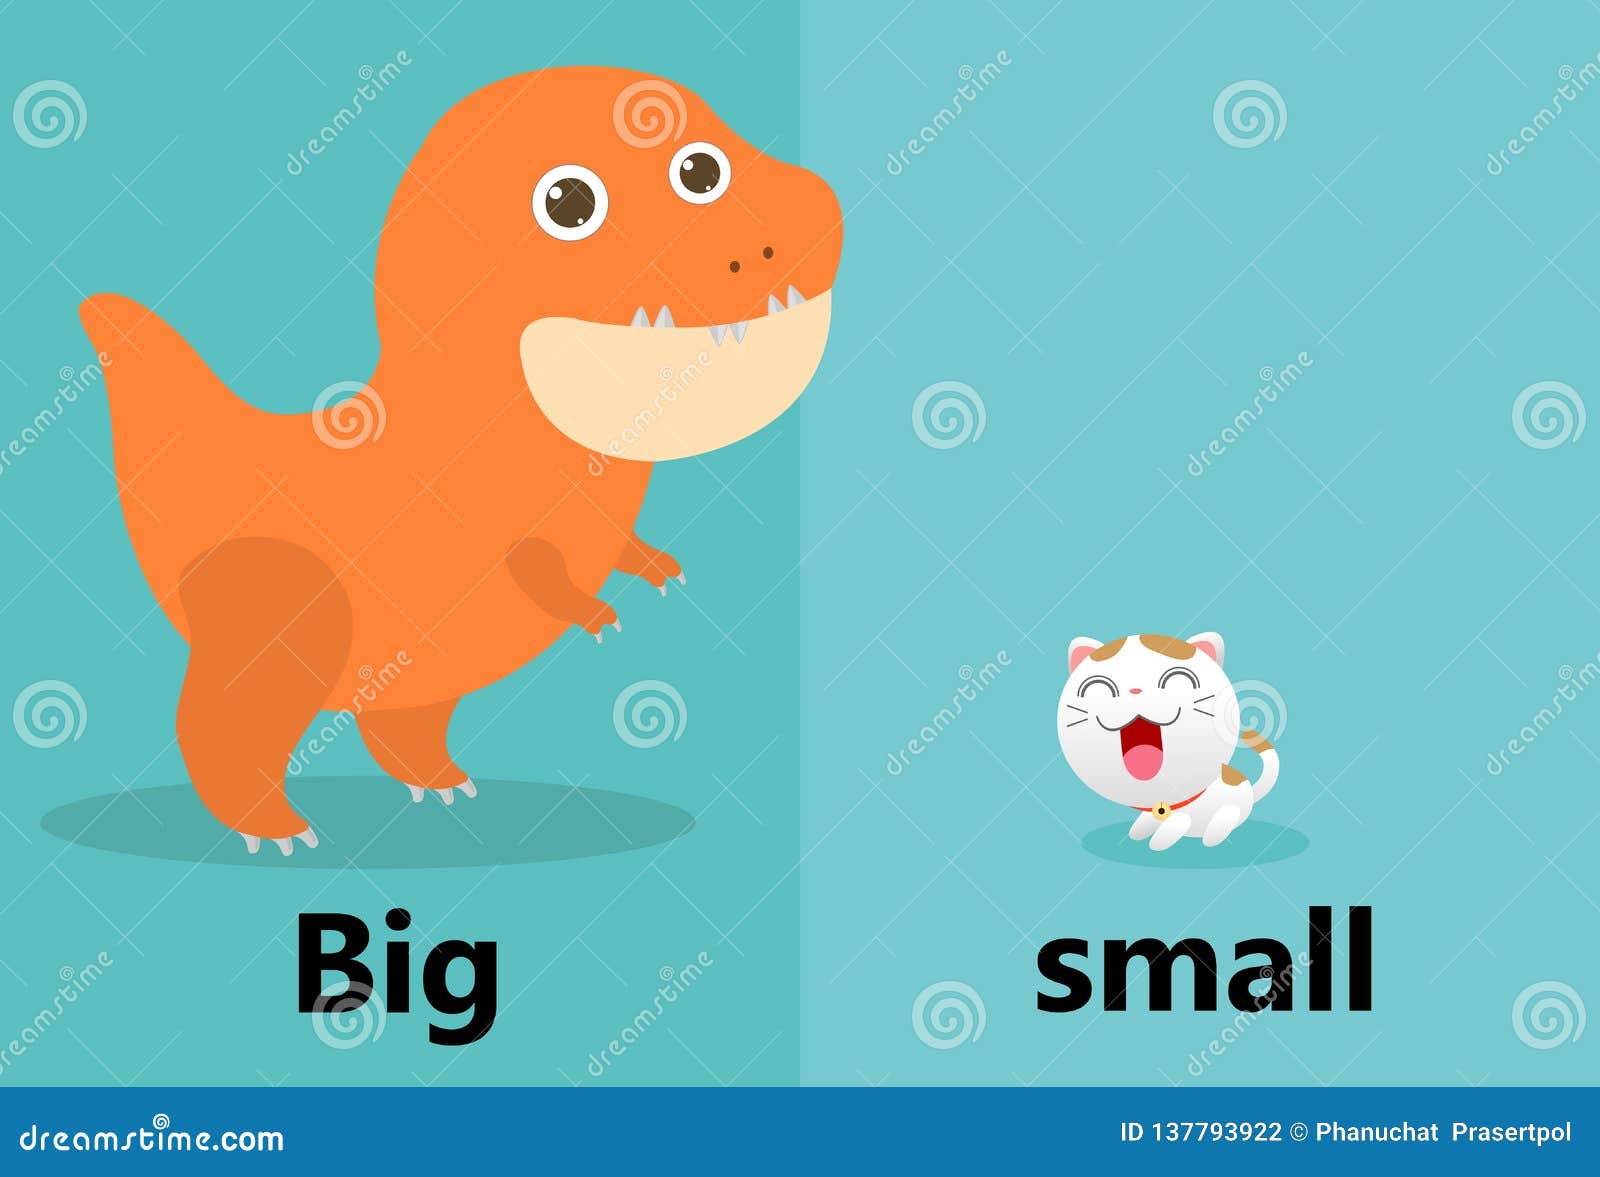 Small big com. Большой маленький на английском. Английский big small. Карточки big small. Слова на английском small big.